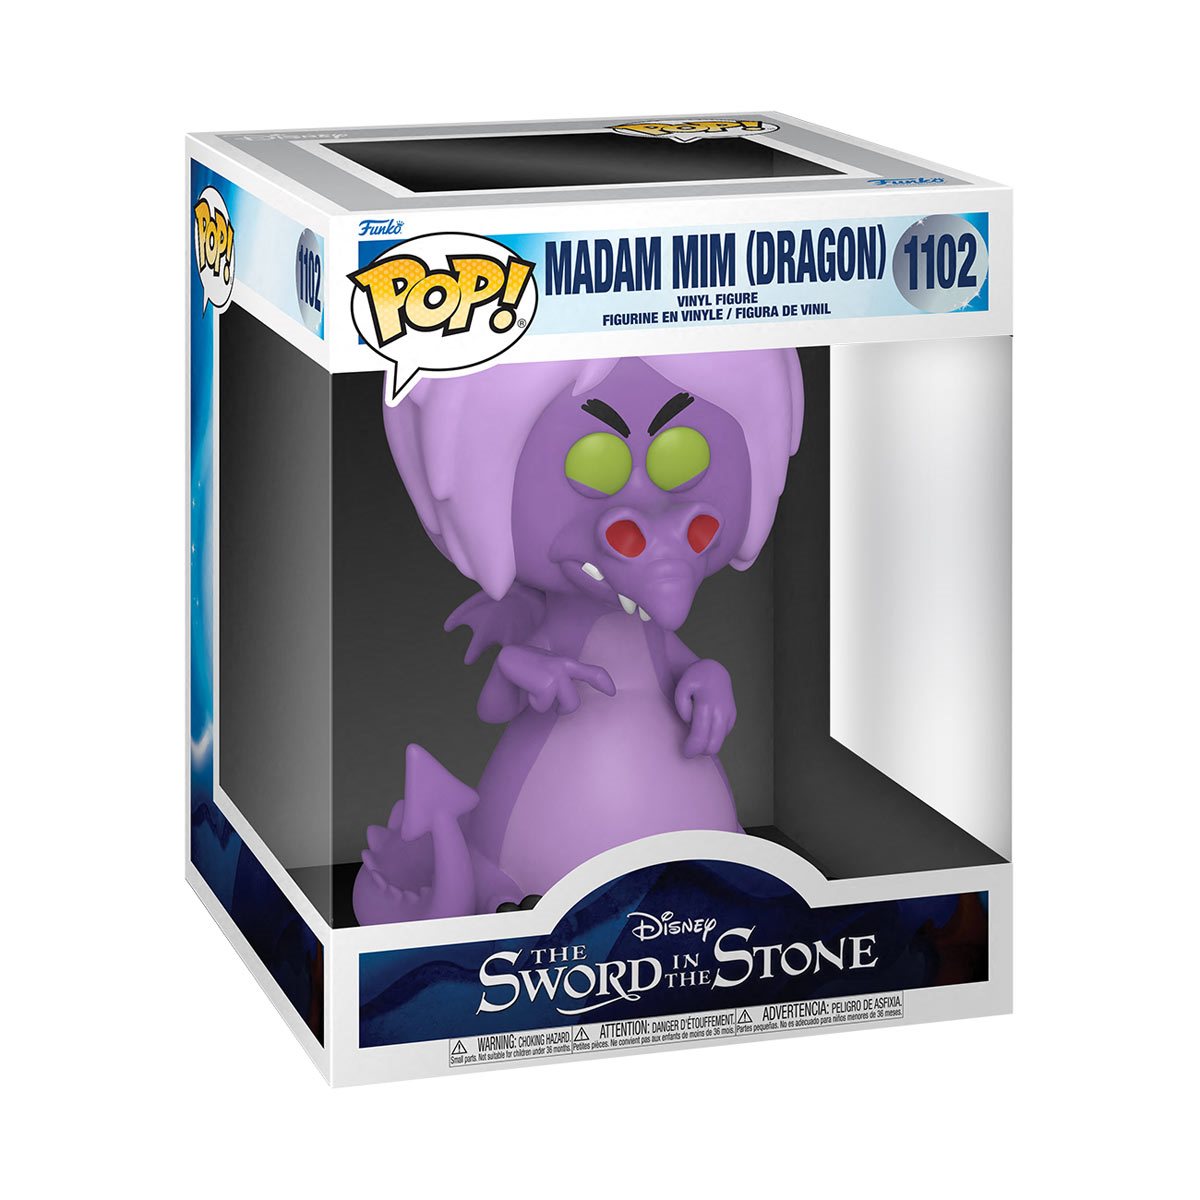 Funko Pop! Disney: The Sword in the Stone - Super Sized 6" Madam Mim as Dragon